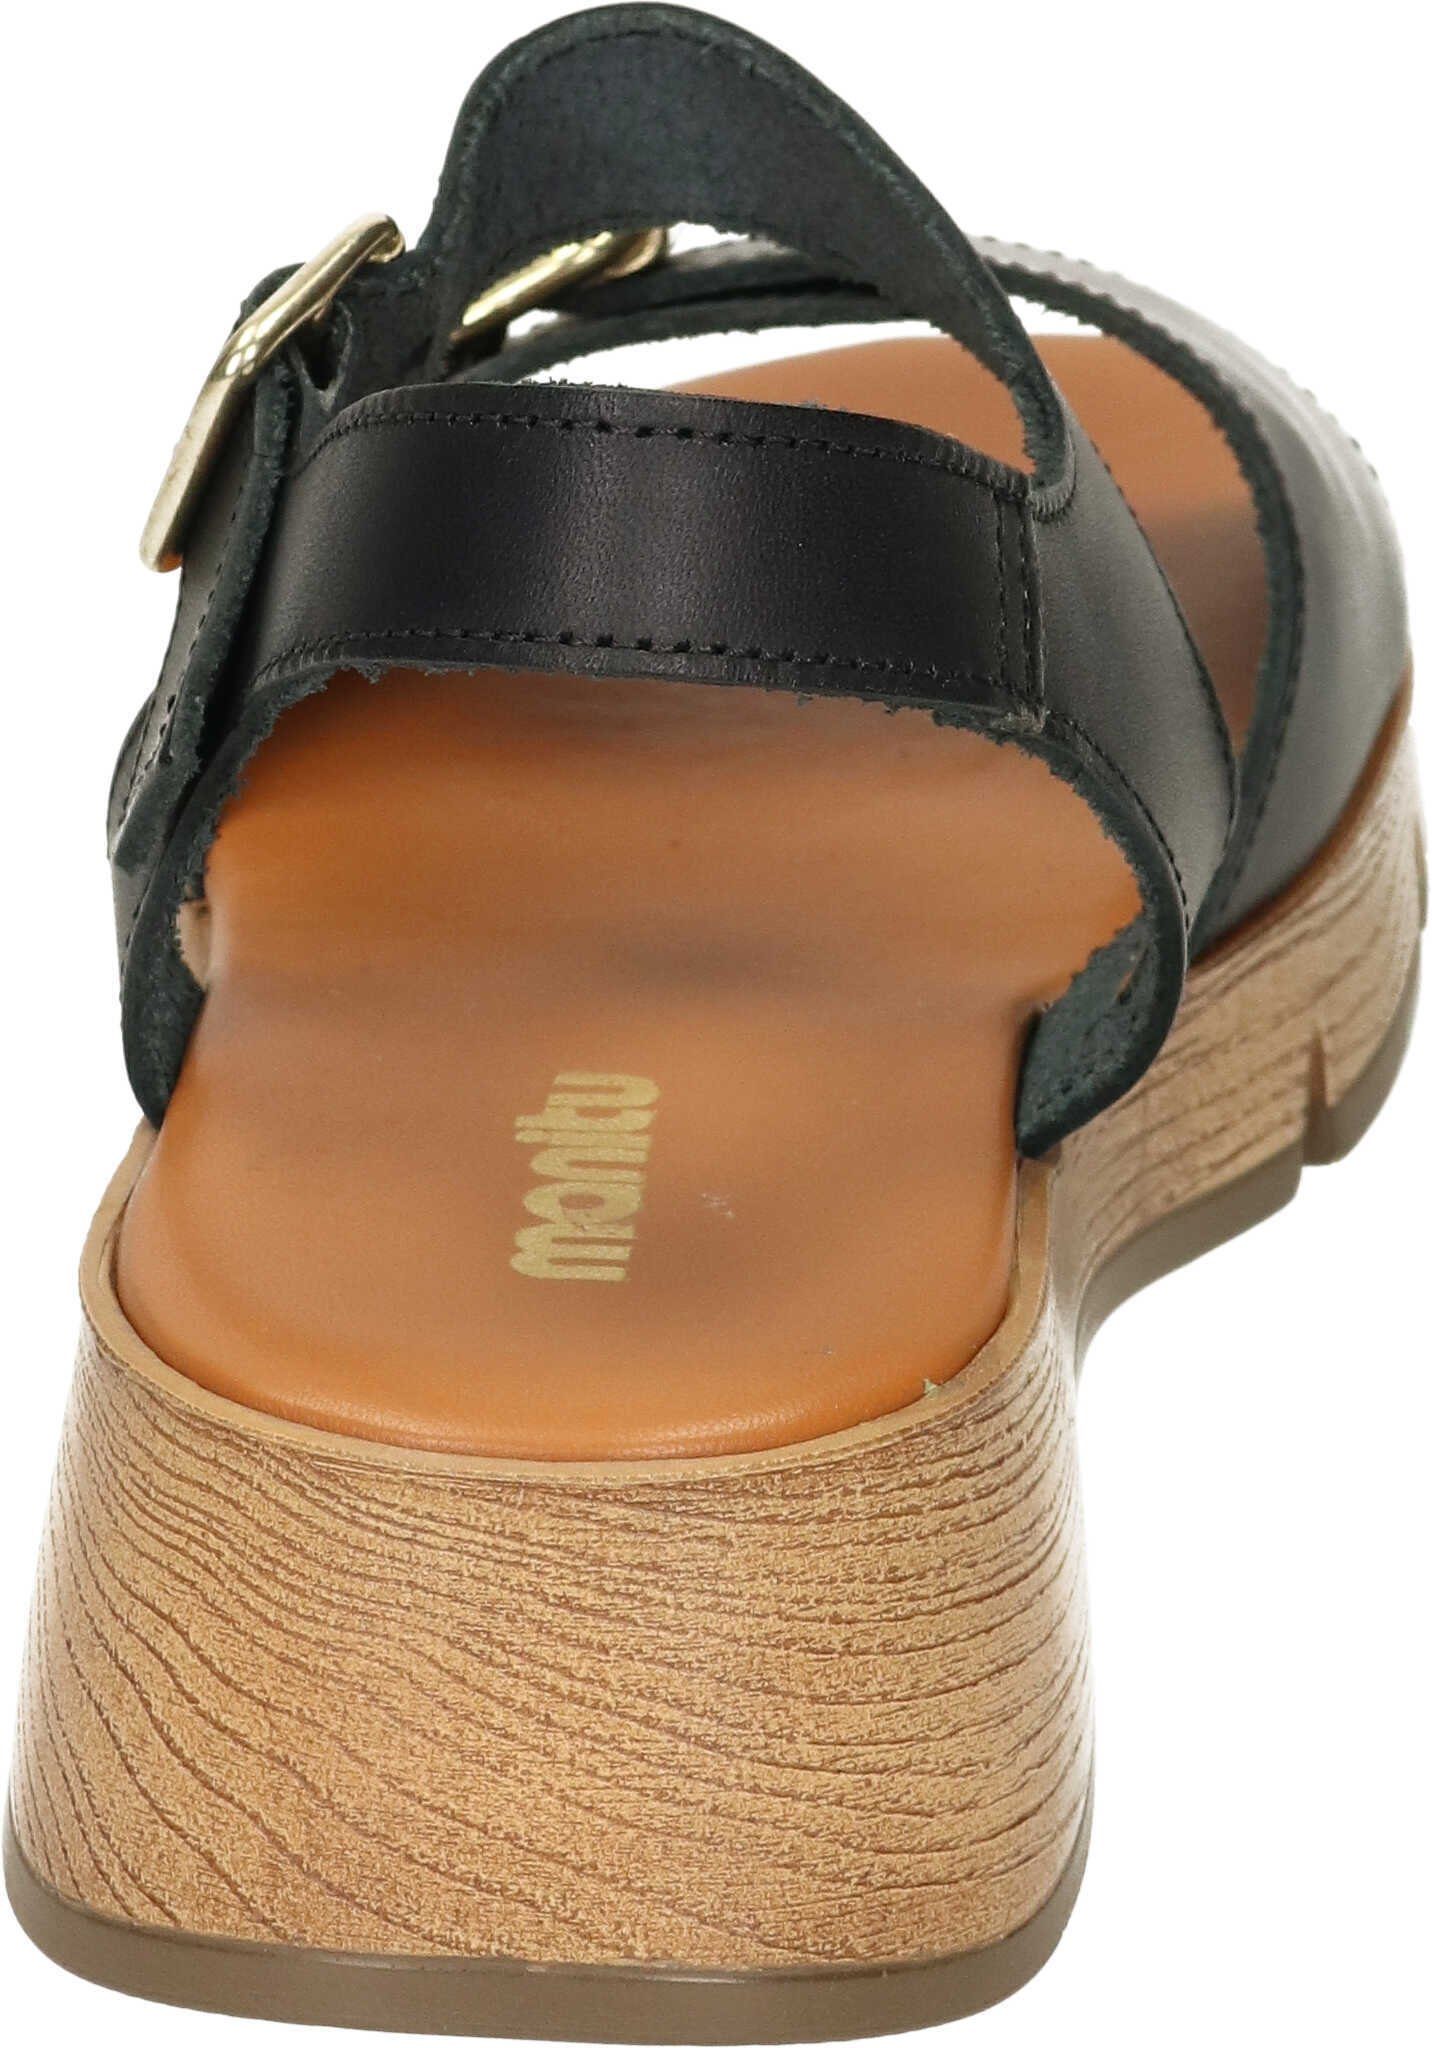 Manitu Sandalen Sandalette schwarz aus echtem Leder